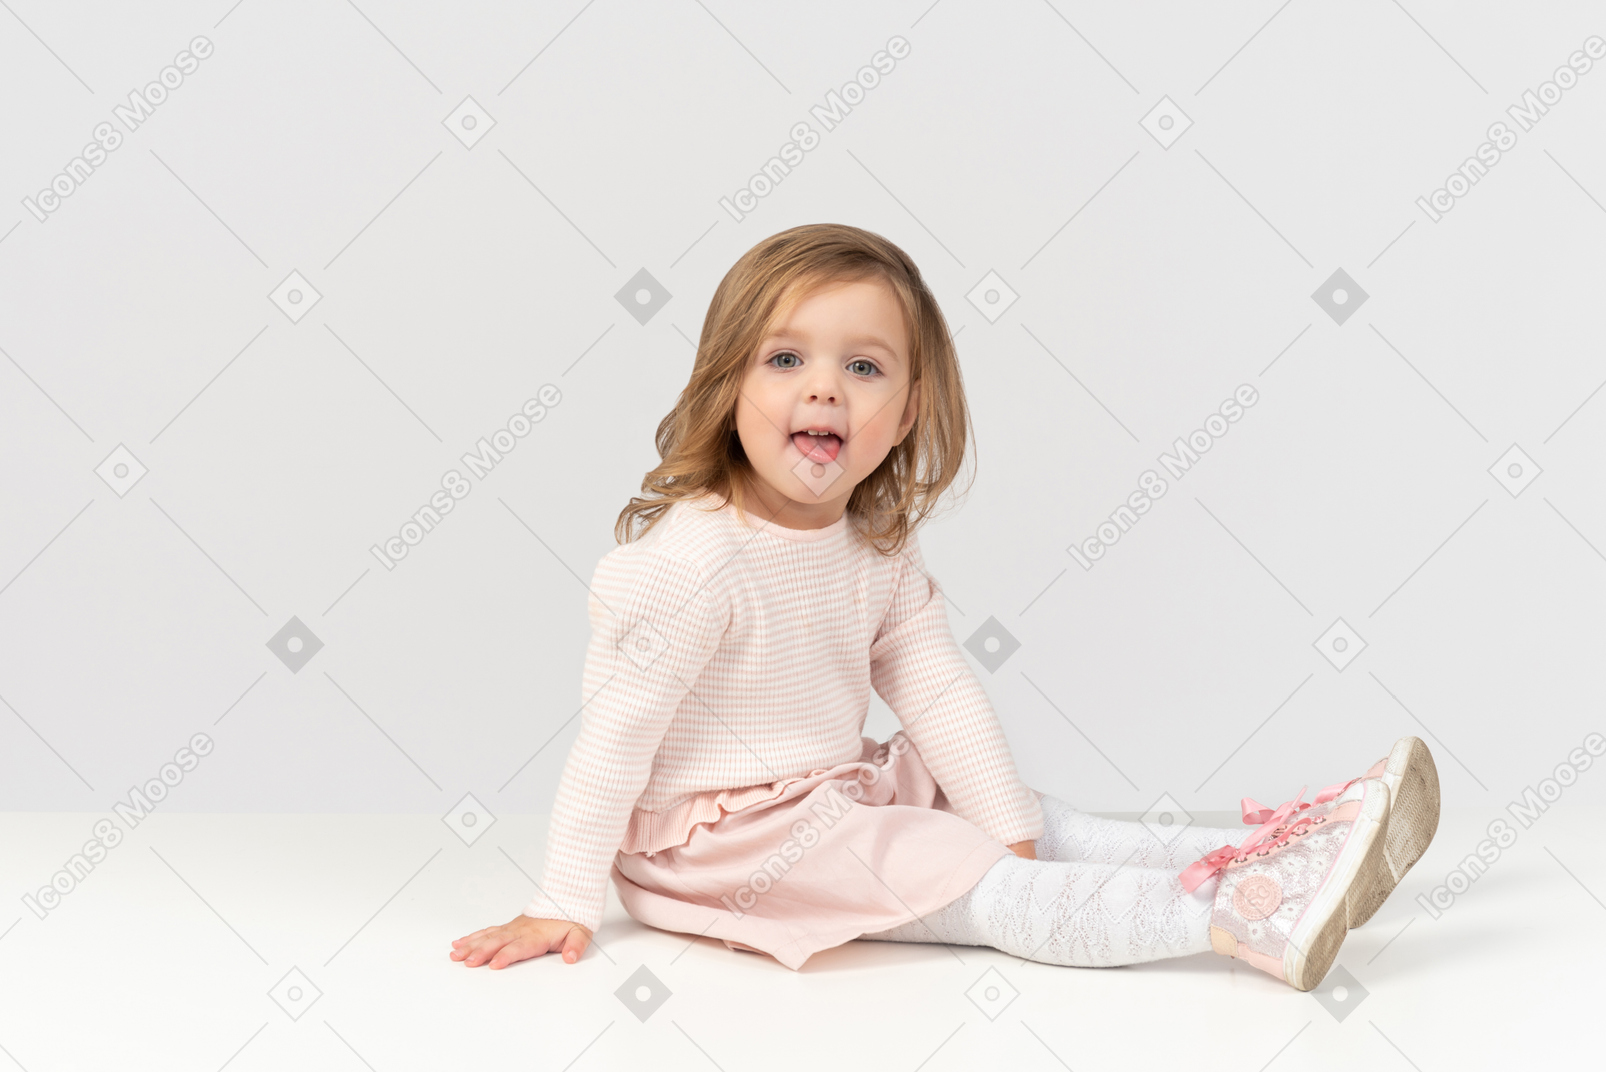 Cute little girl showing a tongue